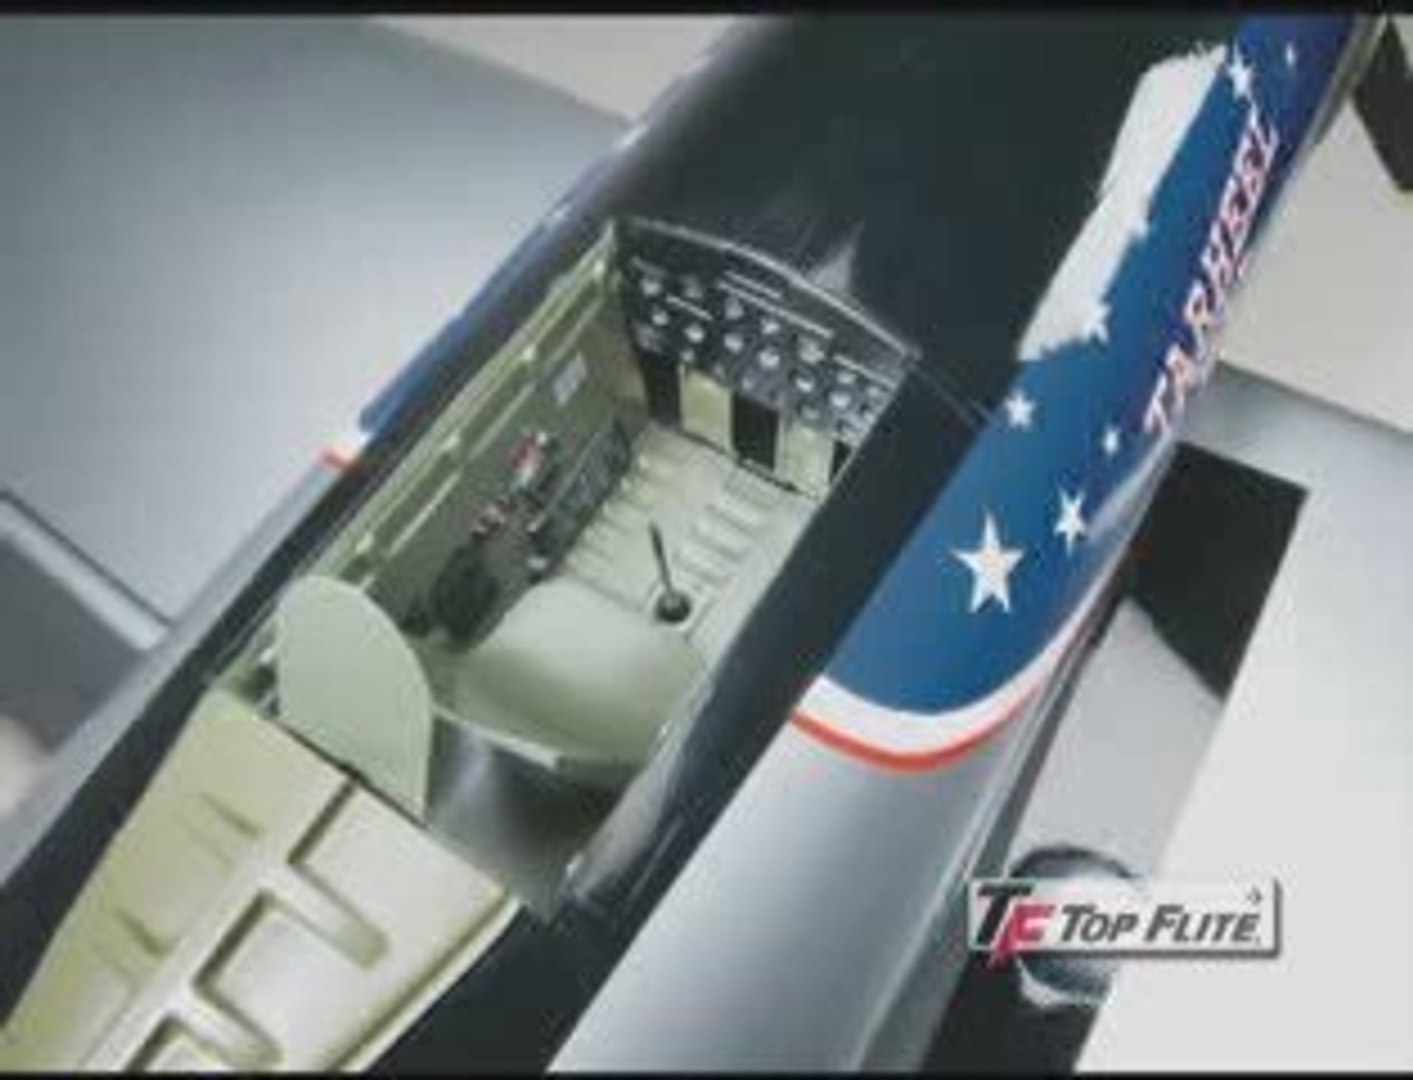 Top Flite Giant P-47 Thunderbolt ARF - video Dailymotion